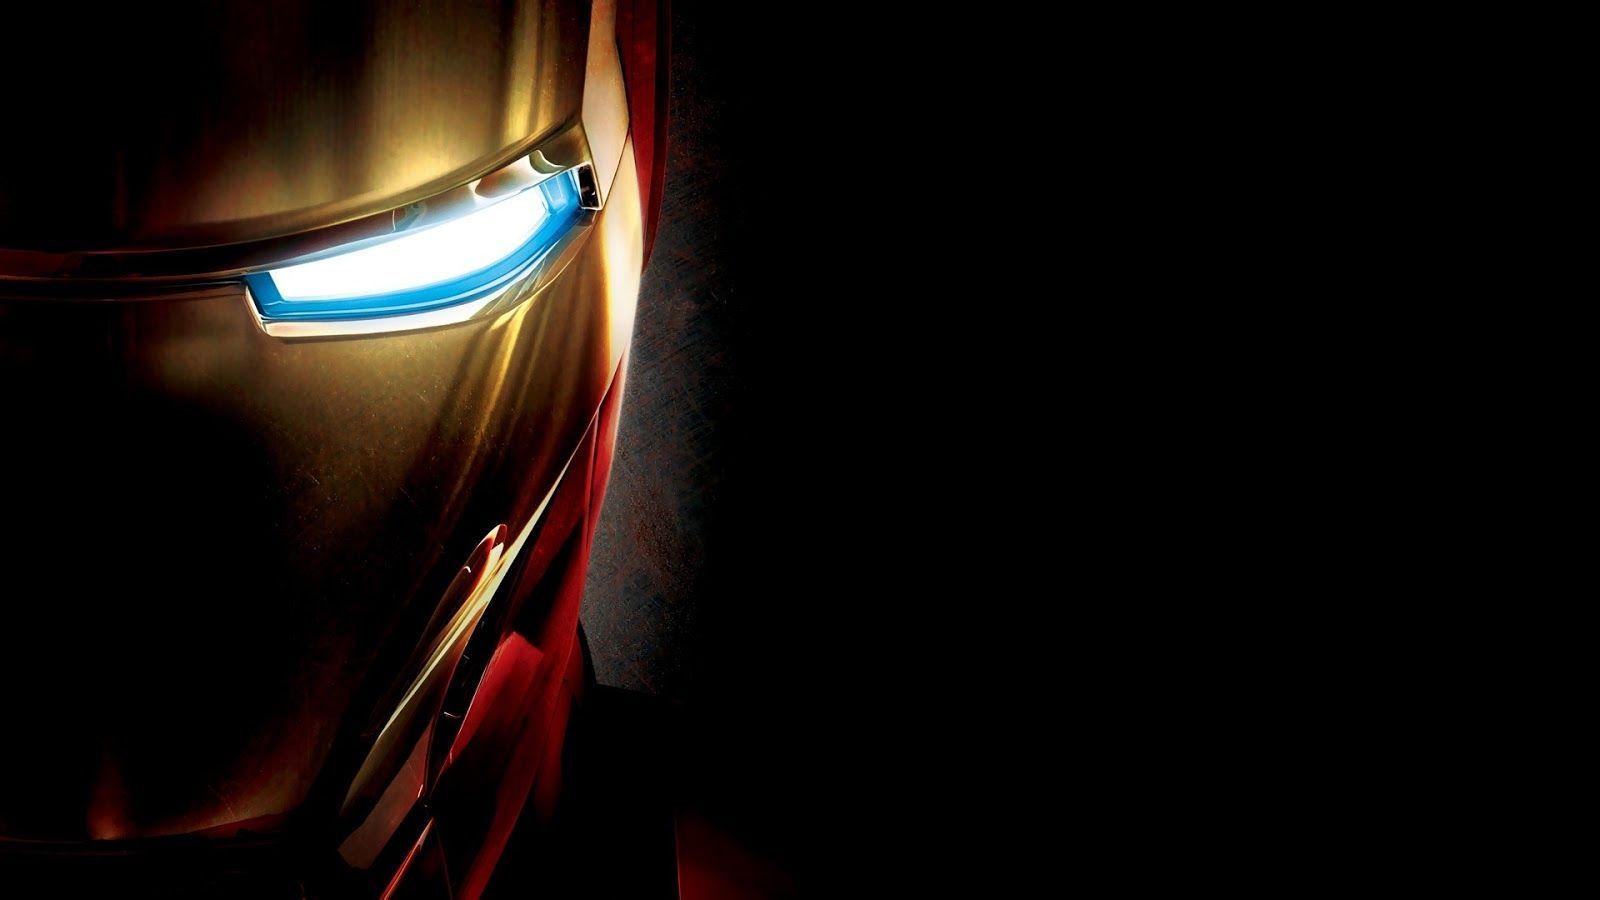 Iron Man Neon Wallpapers - Top Free Iron Man Neon Backgrounds -  WallpaperAccess